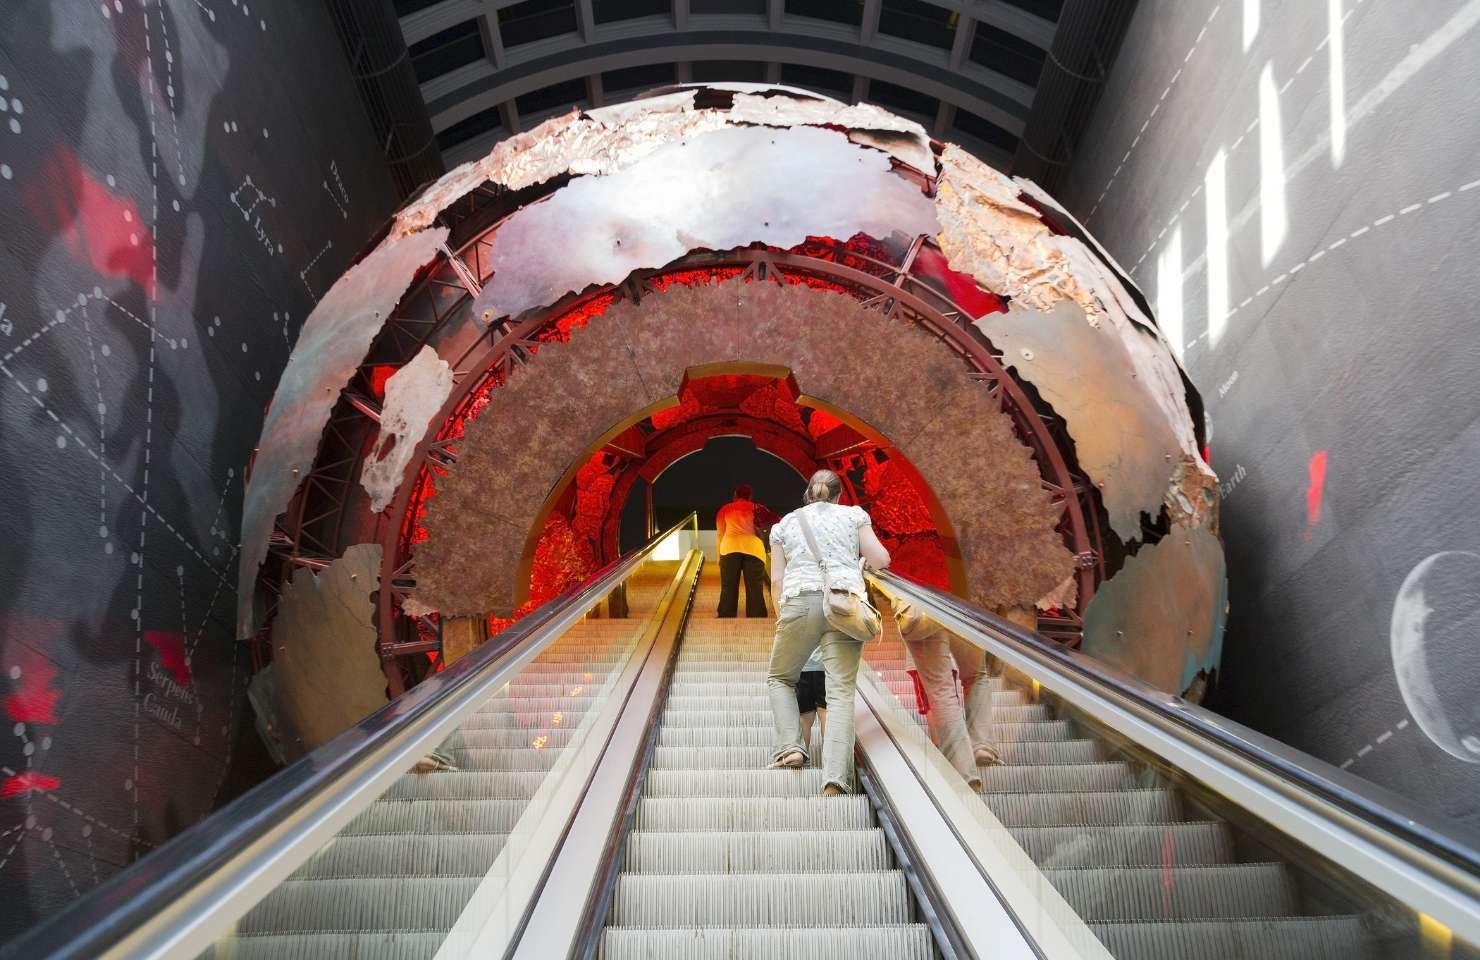 Treppe im Wissenschaftsmuseum in london